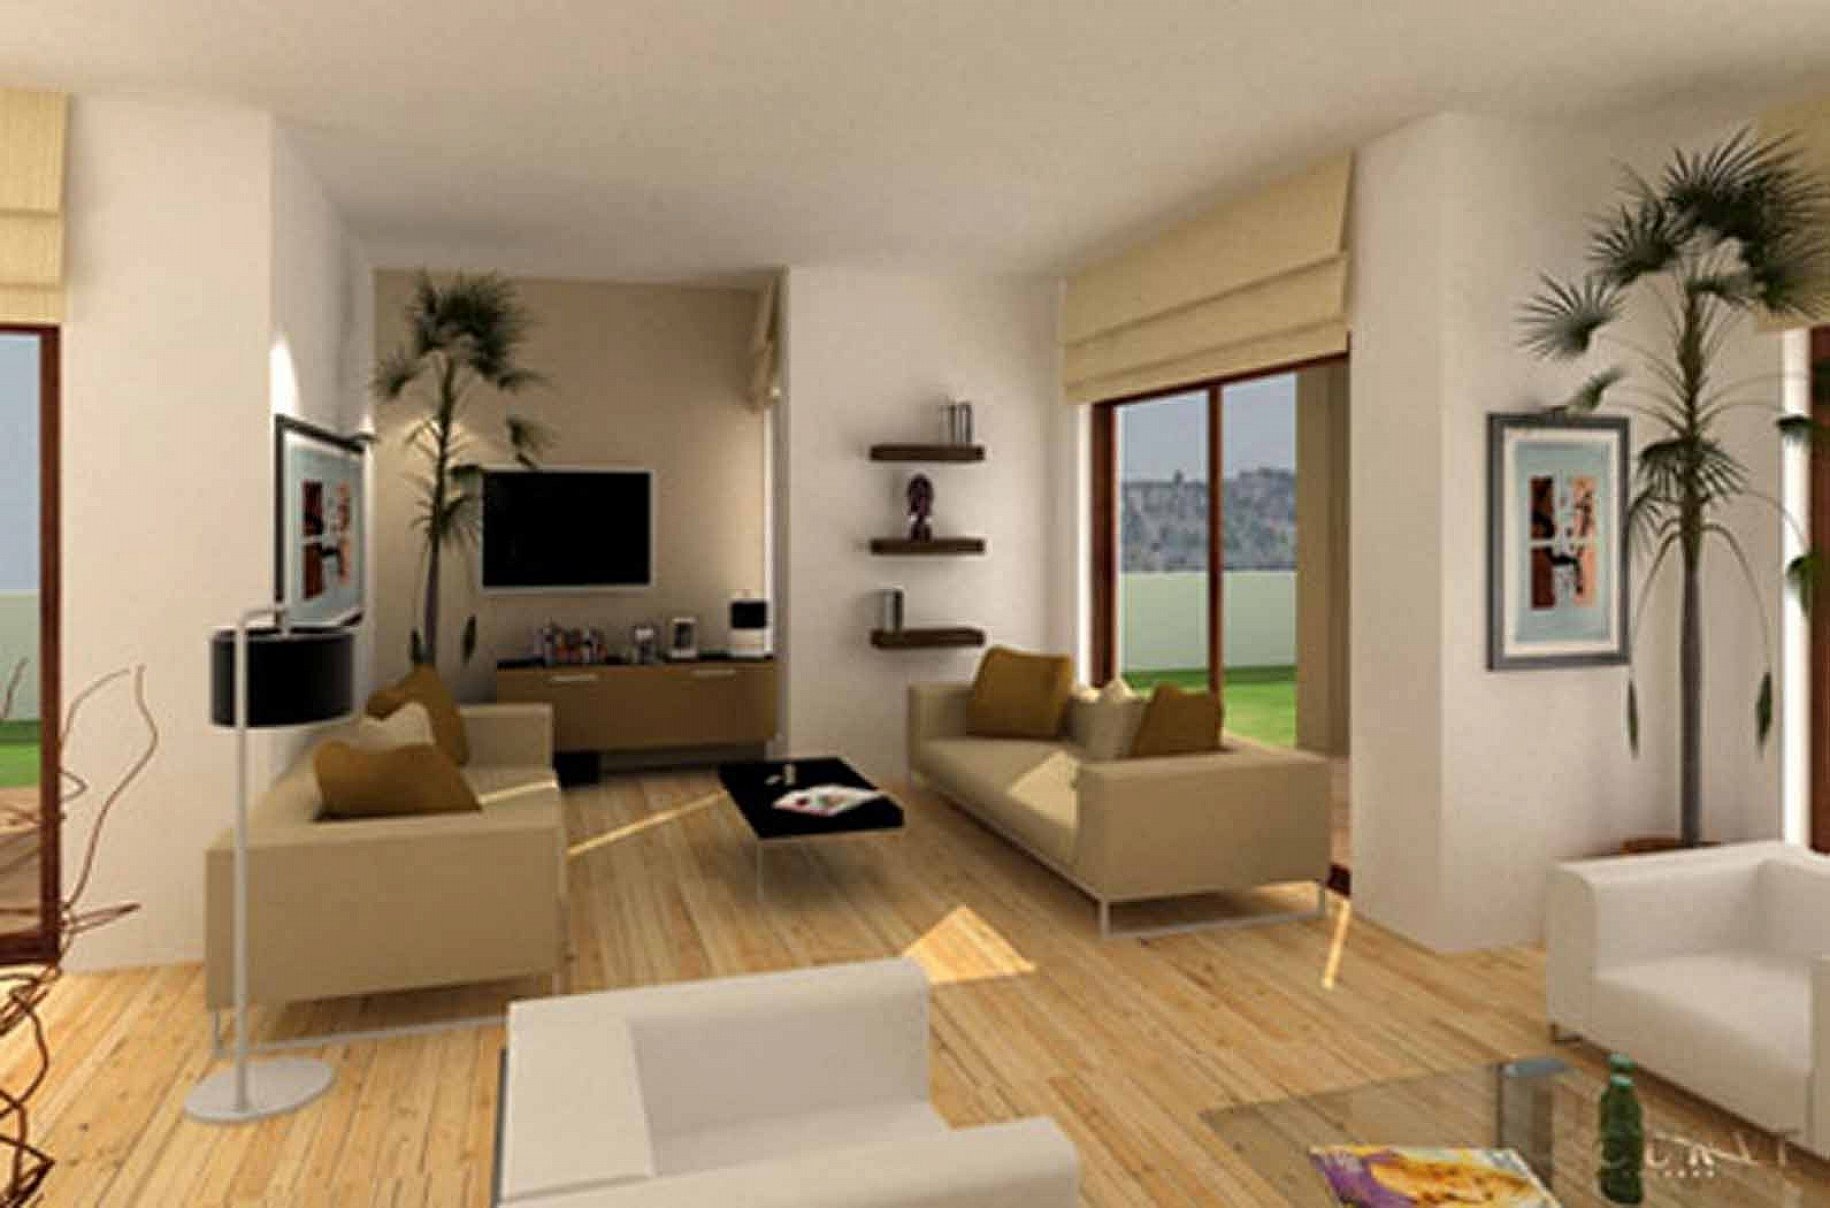 10 Stylish Apartment Decorating Ideas For Men new apartment decorating ideas men 7 12669 2023